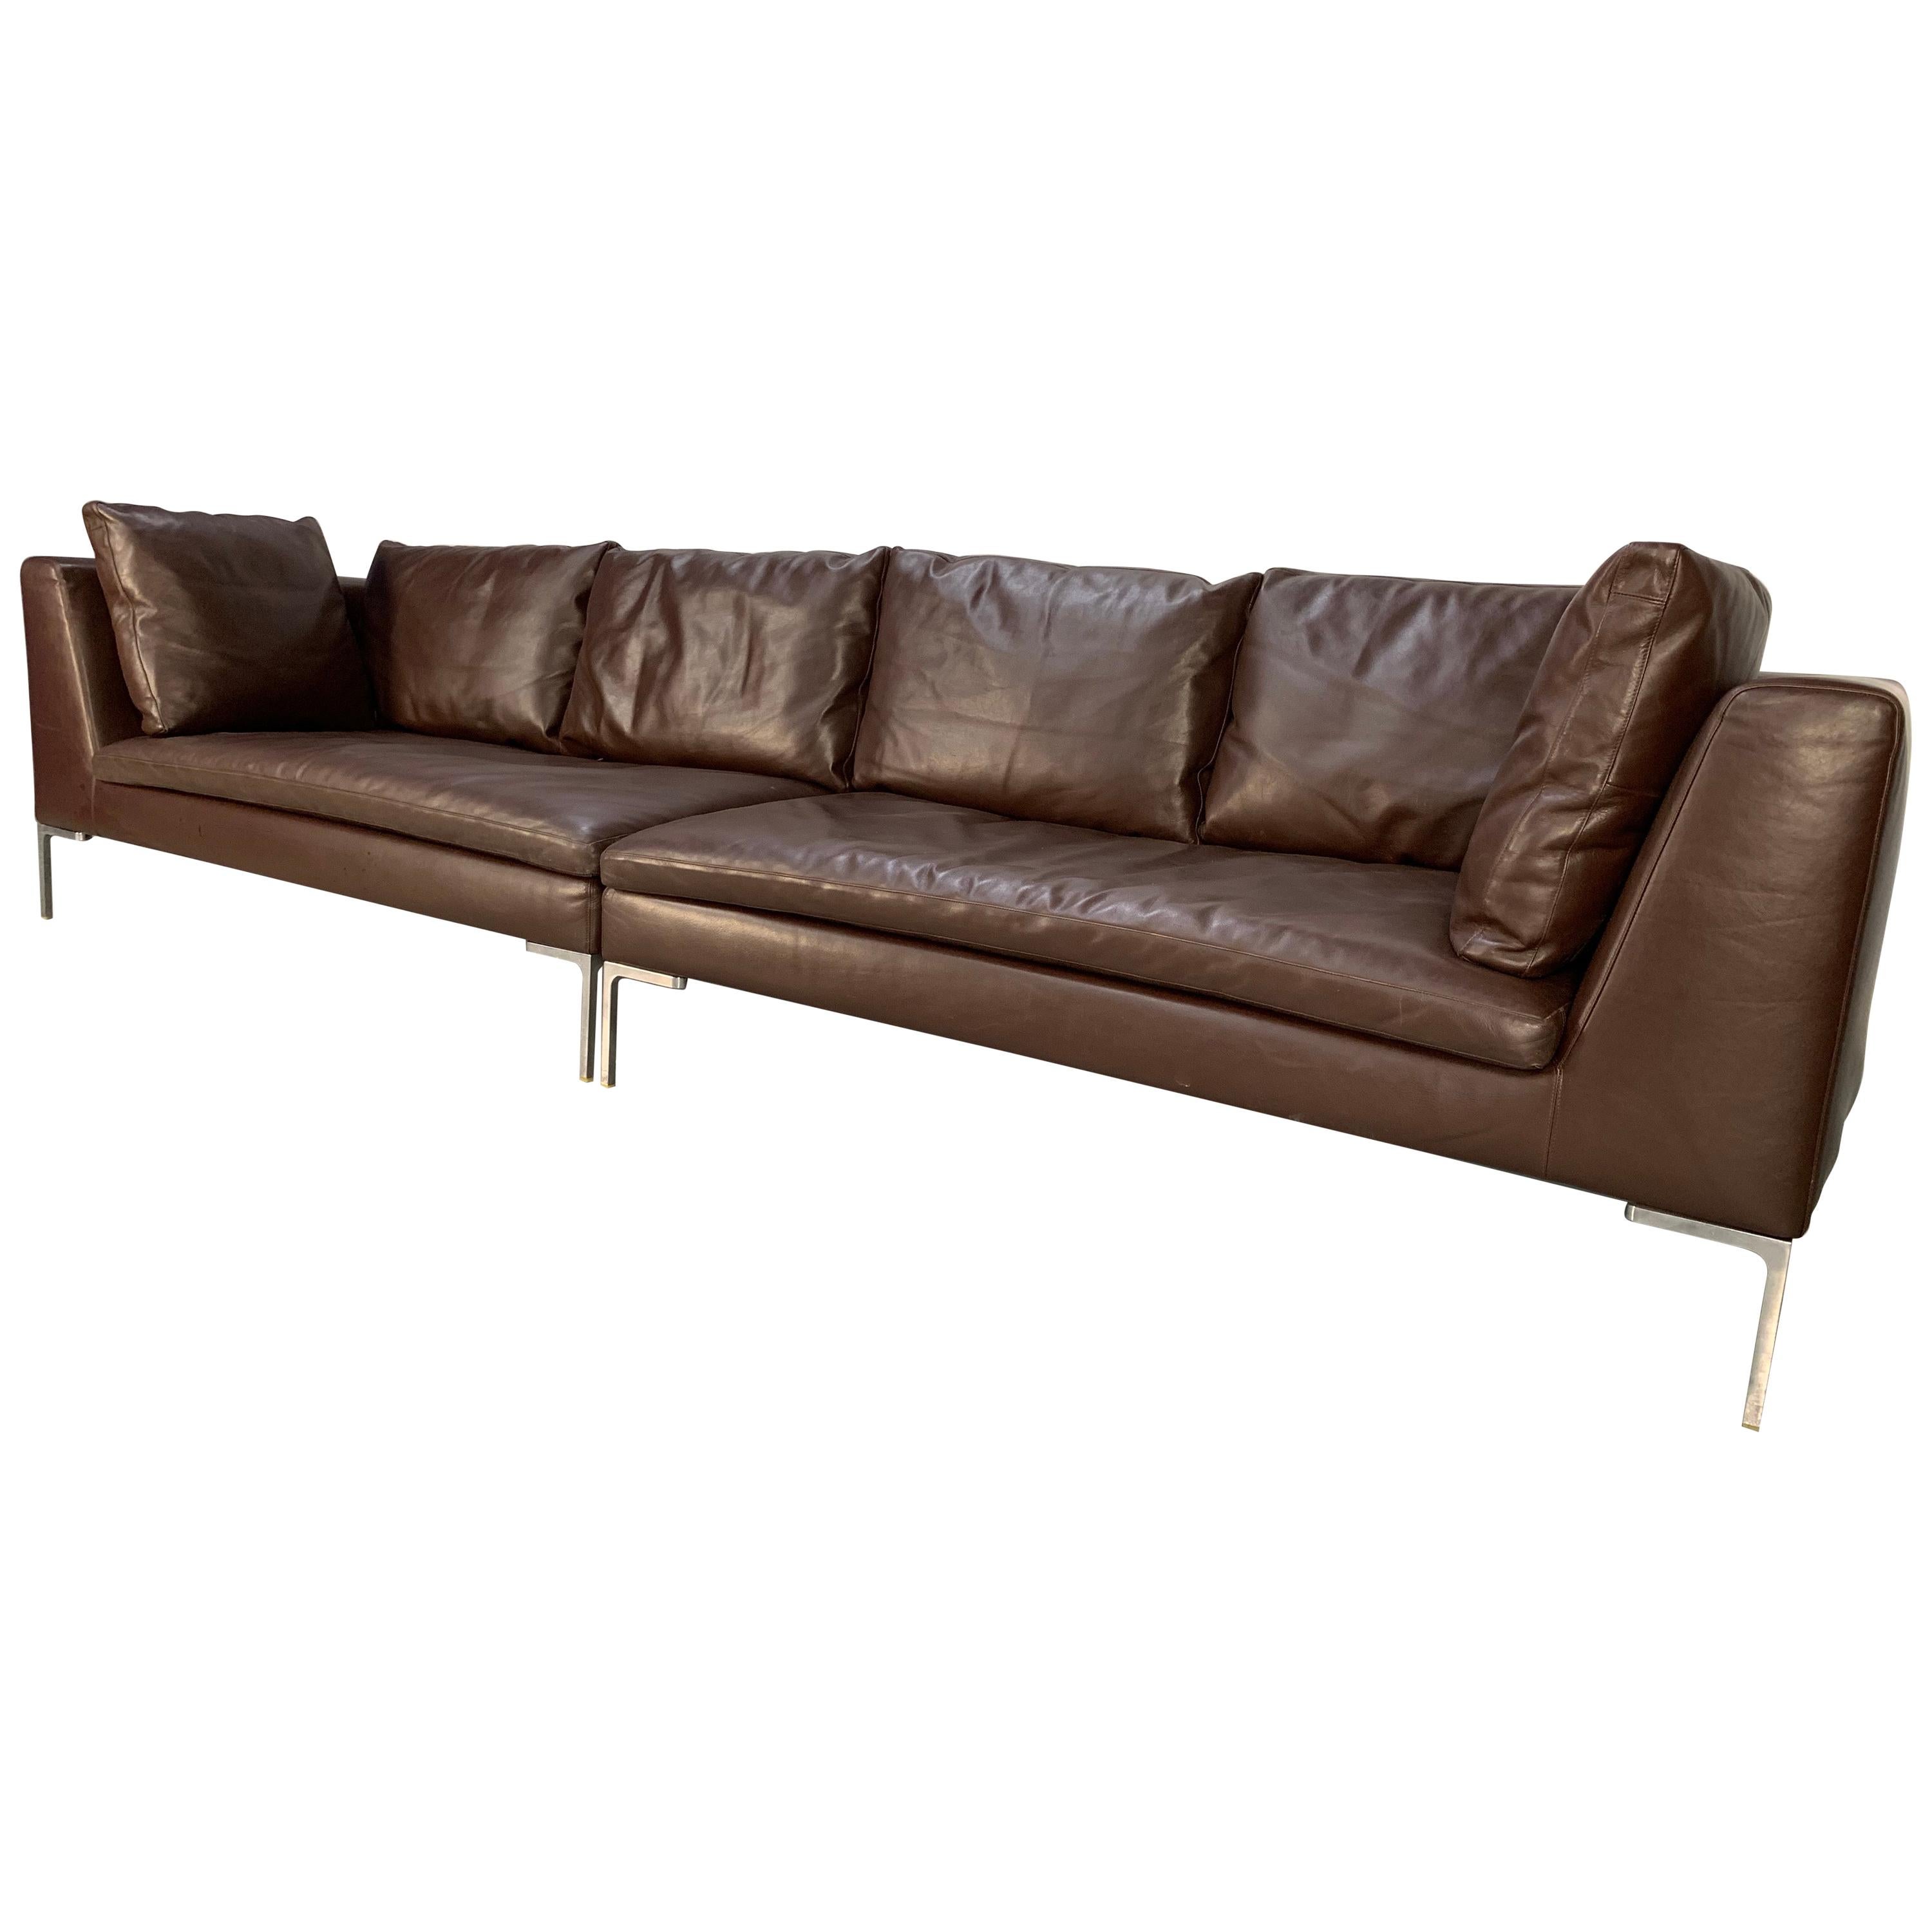 B&B Italia "Charles" Sectional 4-Seat Sofa in Brown "Gamma" Leather